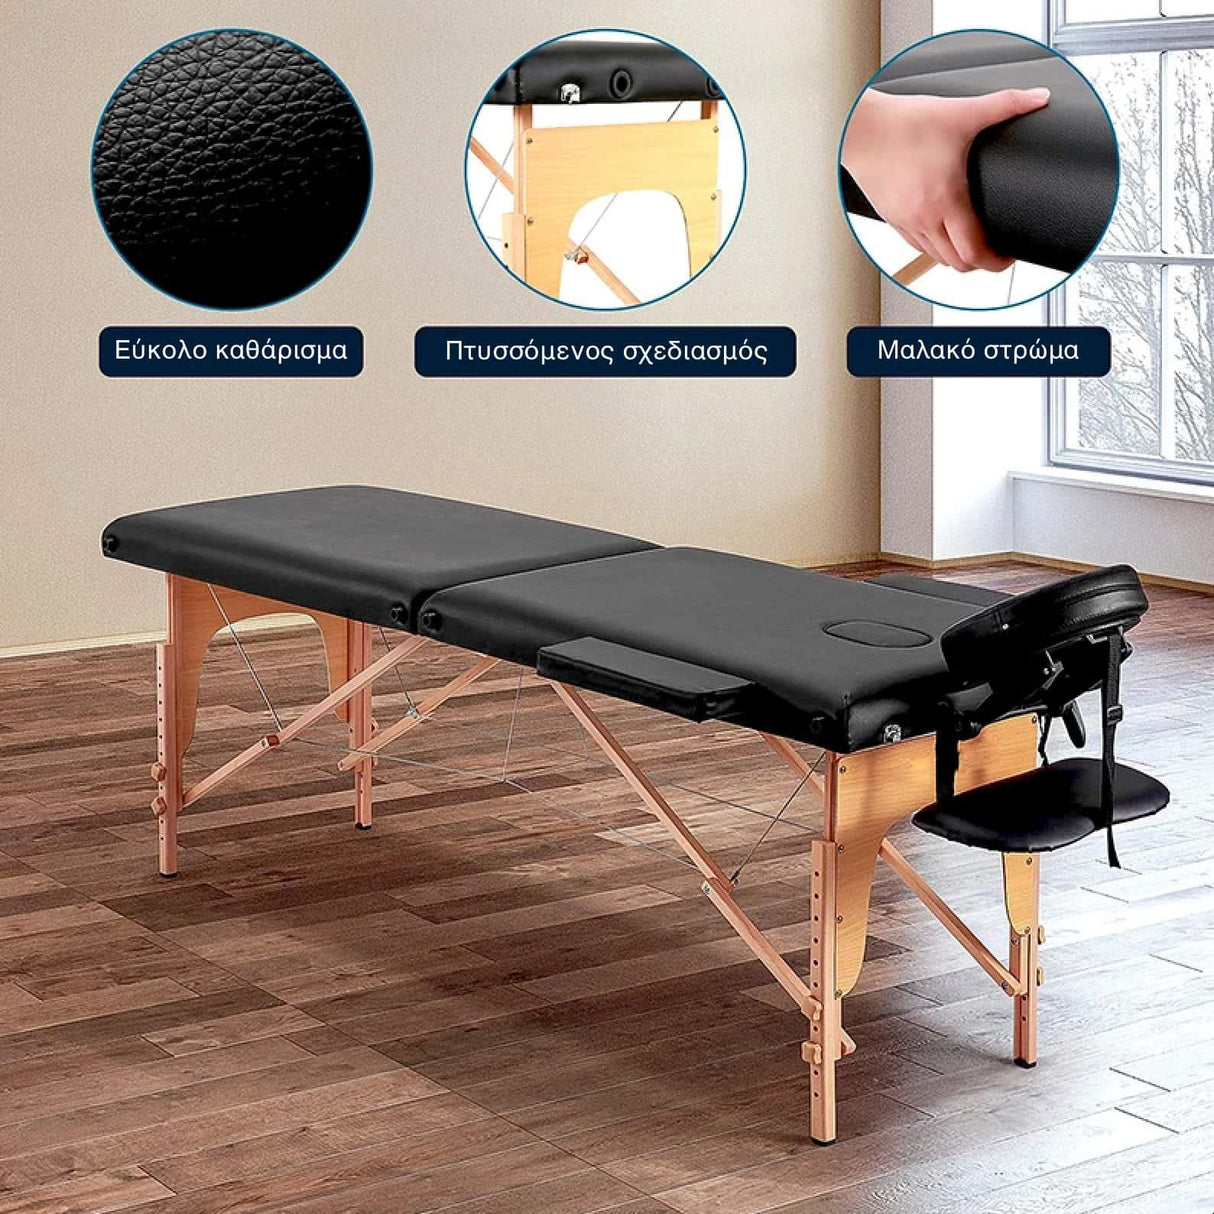 VSL Sports - Φορητό Kρεβάτι για μασάζ, αισθητική, φυσικοθεραπεία, tattoo, με μαύρο στρώμα βινυλίου, Ξύλινο σκελετό και ενισχυμένη τσάντα μεταφοράς - VSL140012BLK - wox.gr